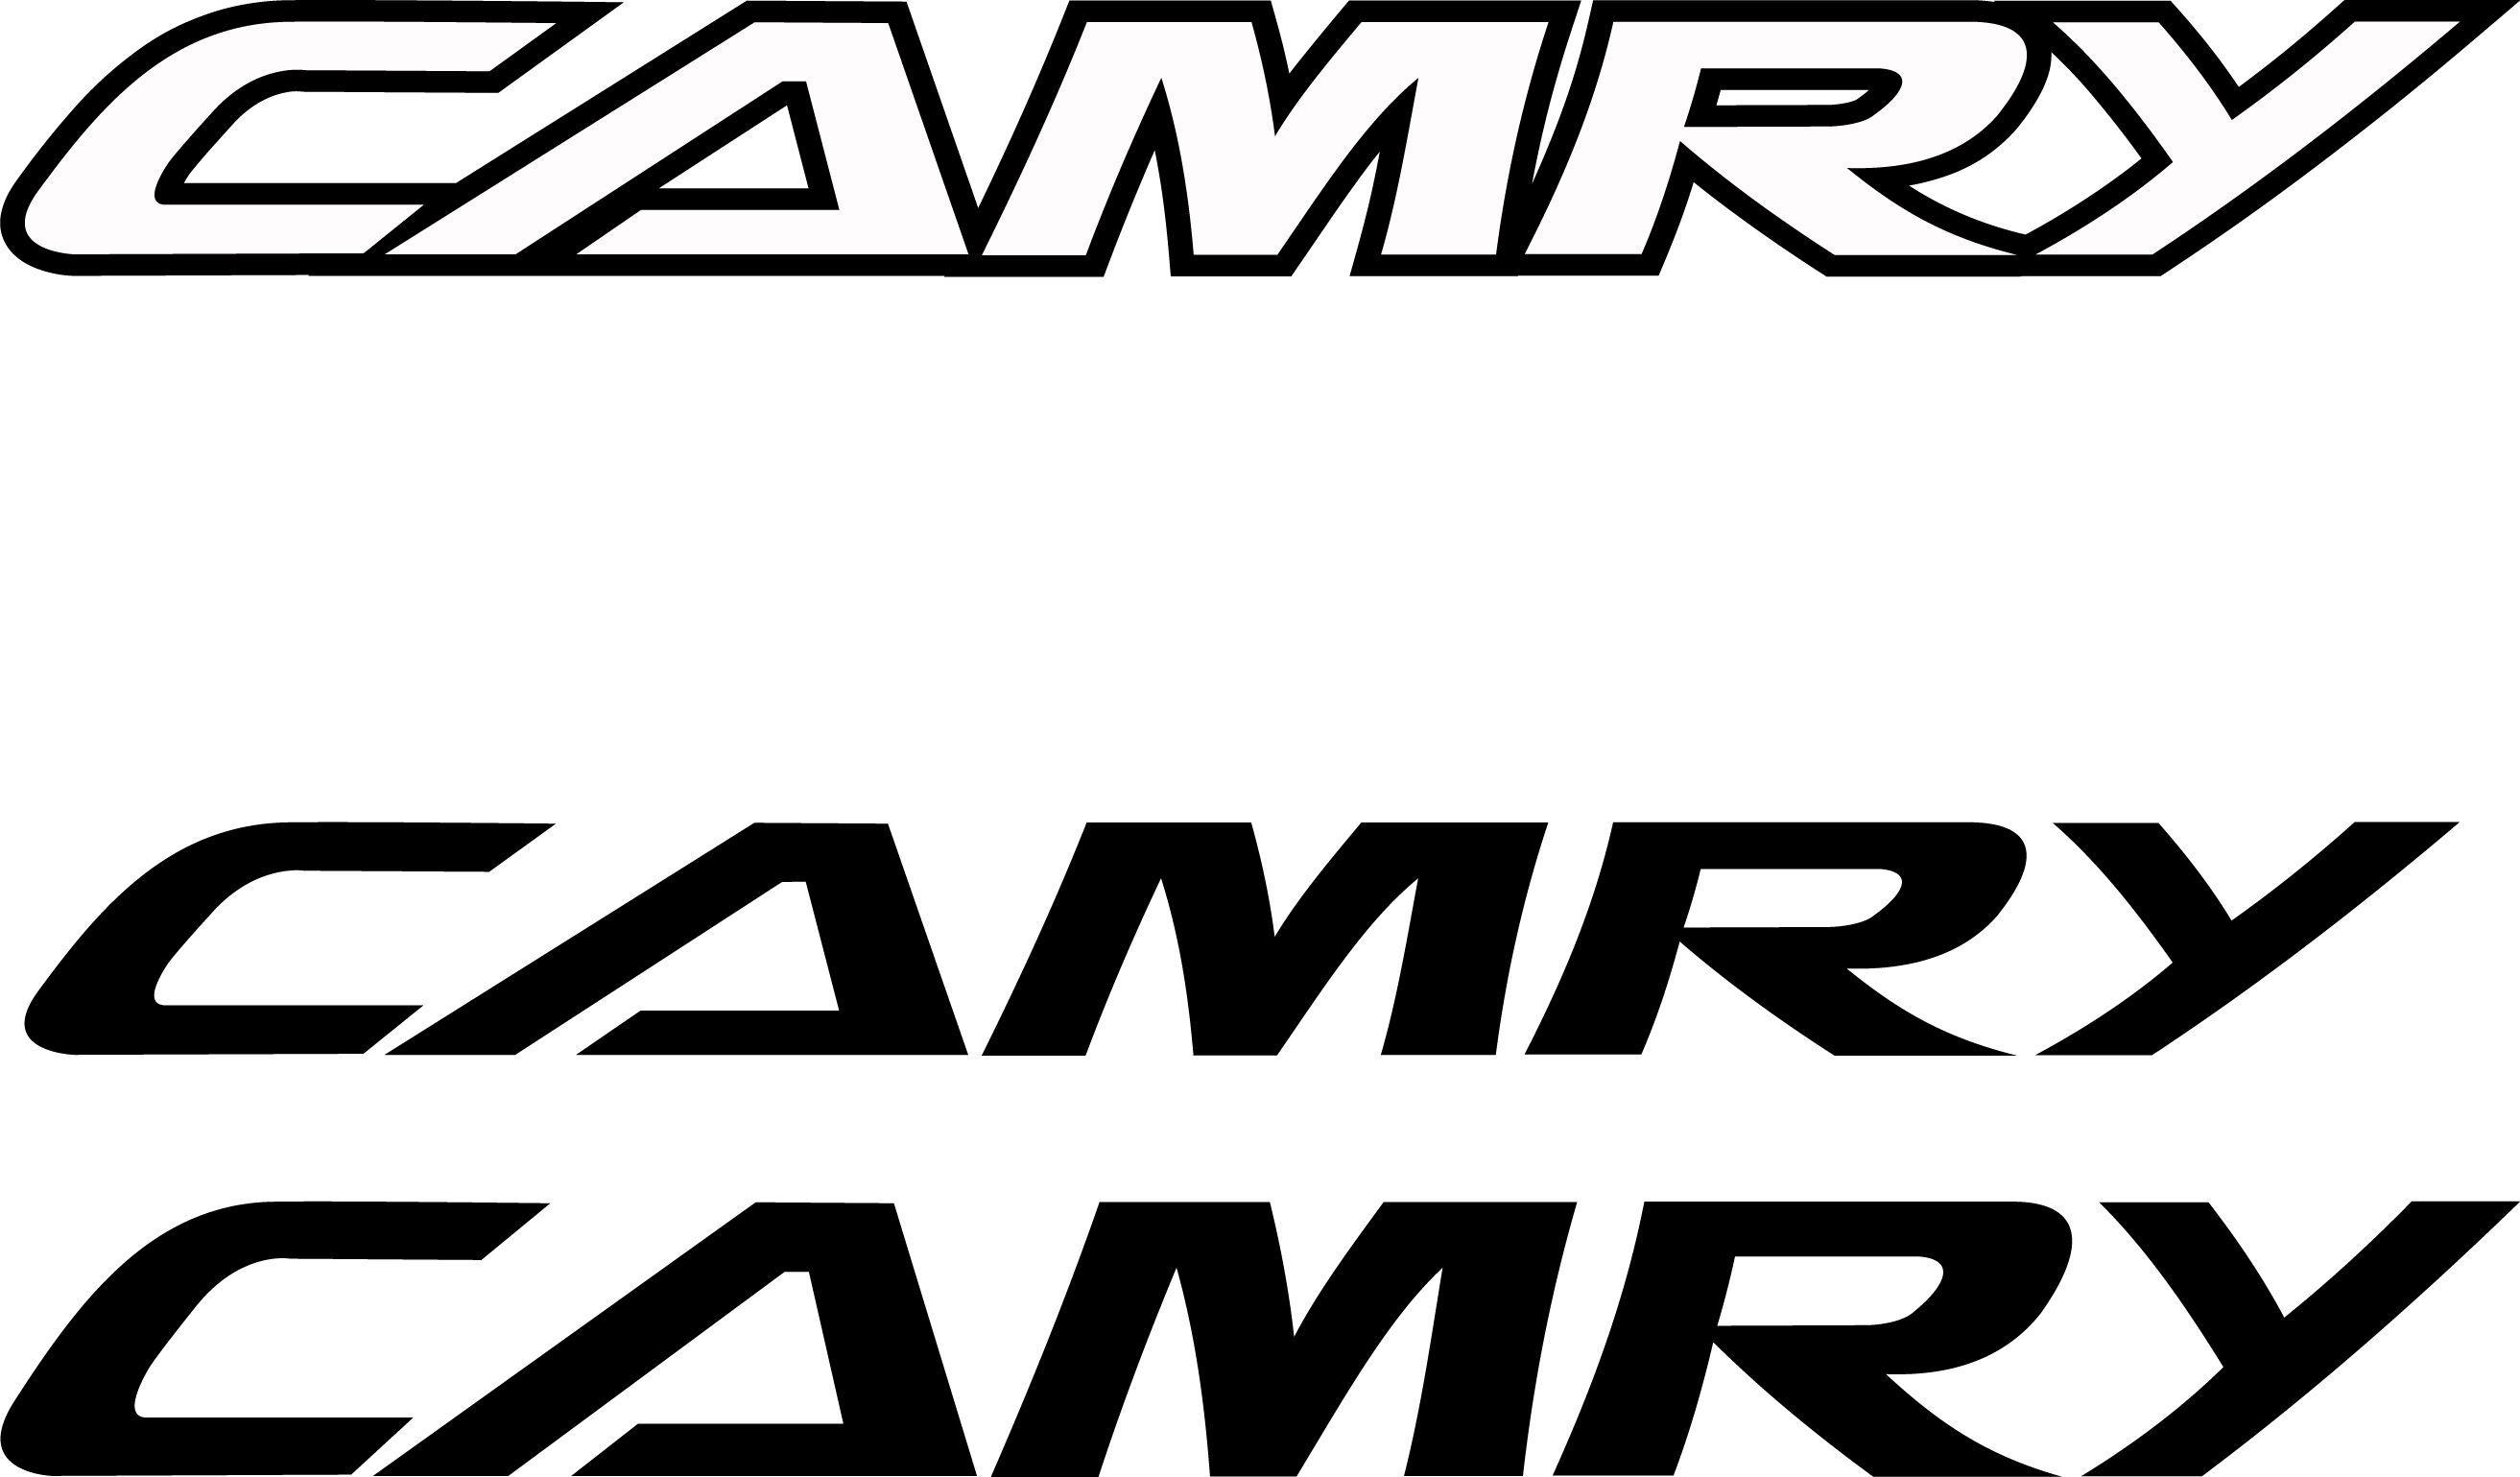 Camry logo